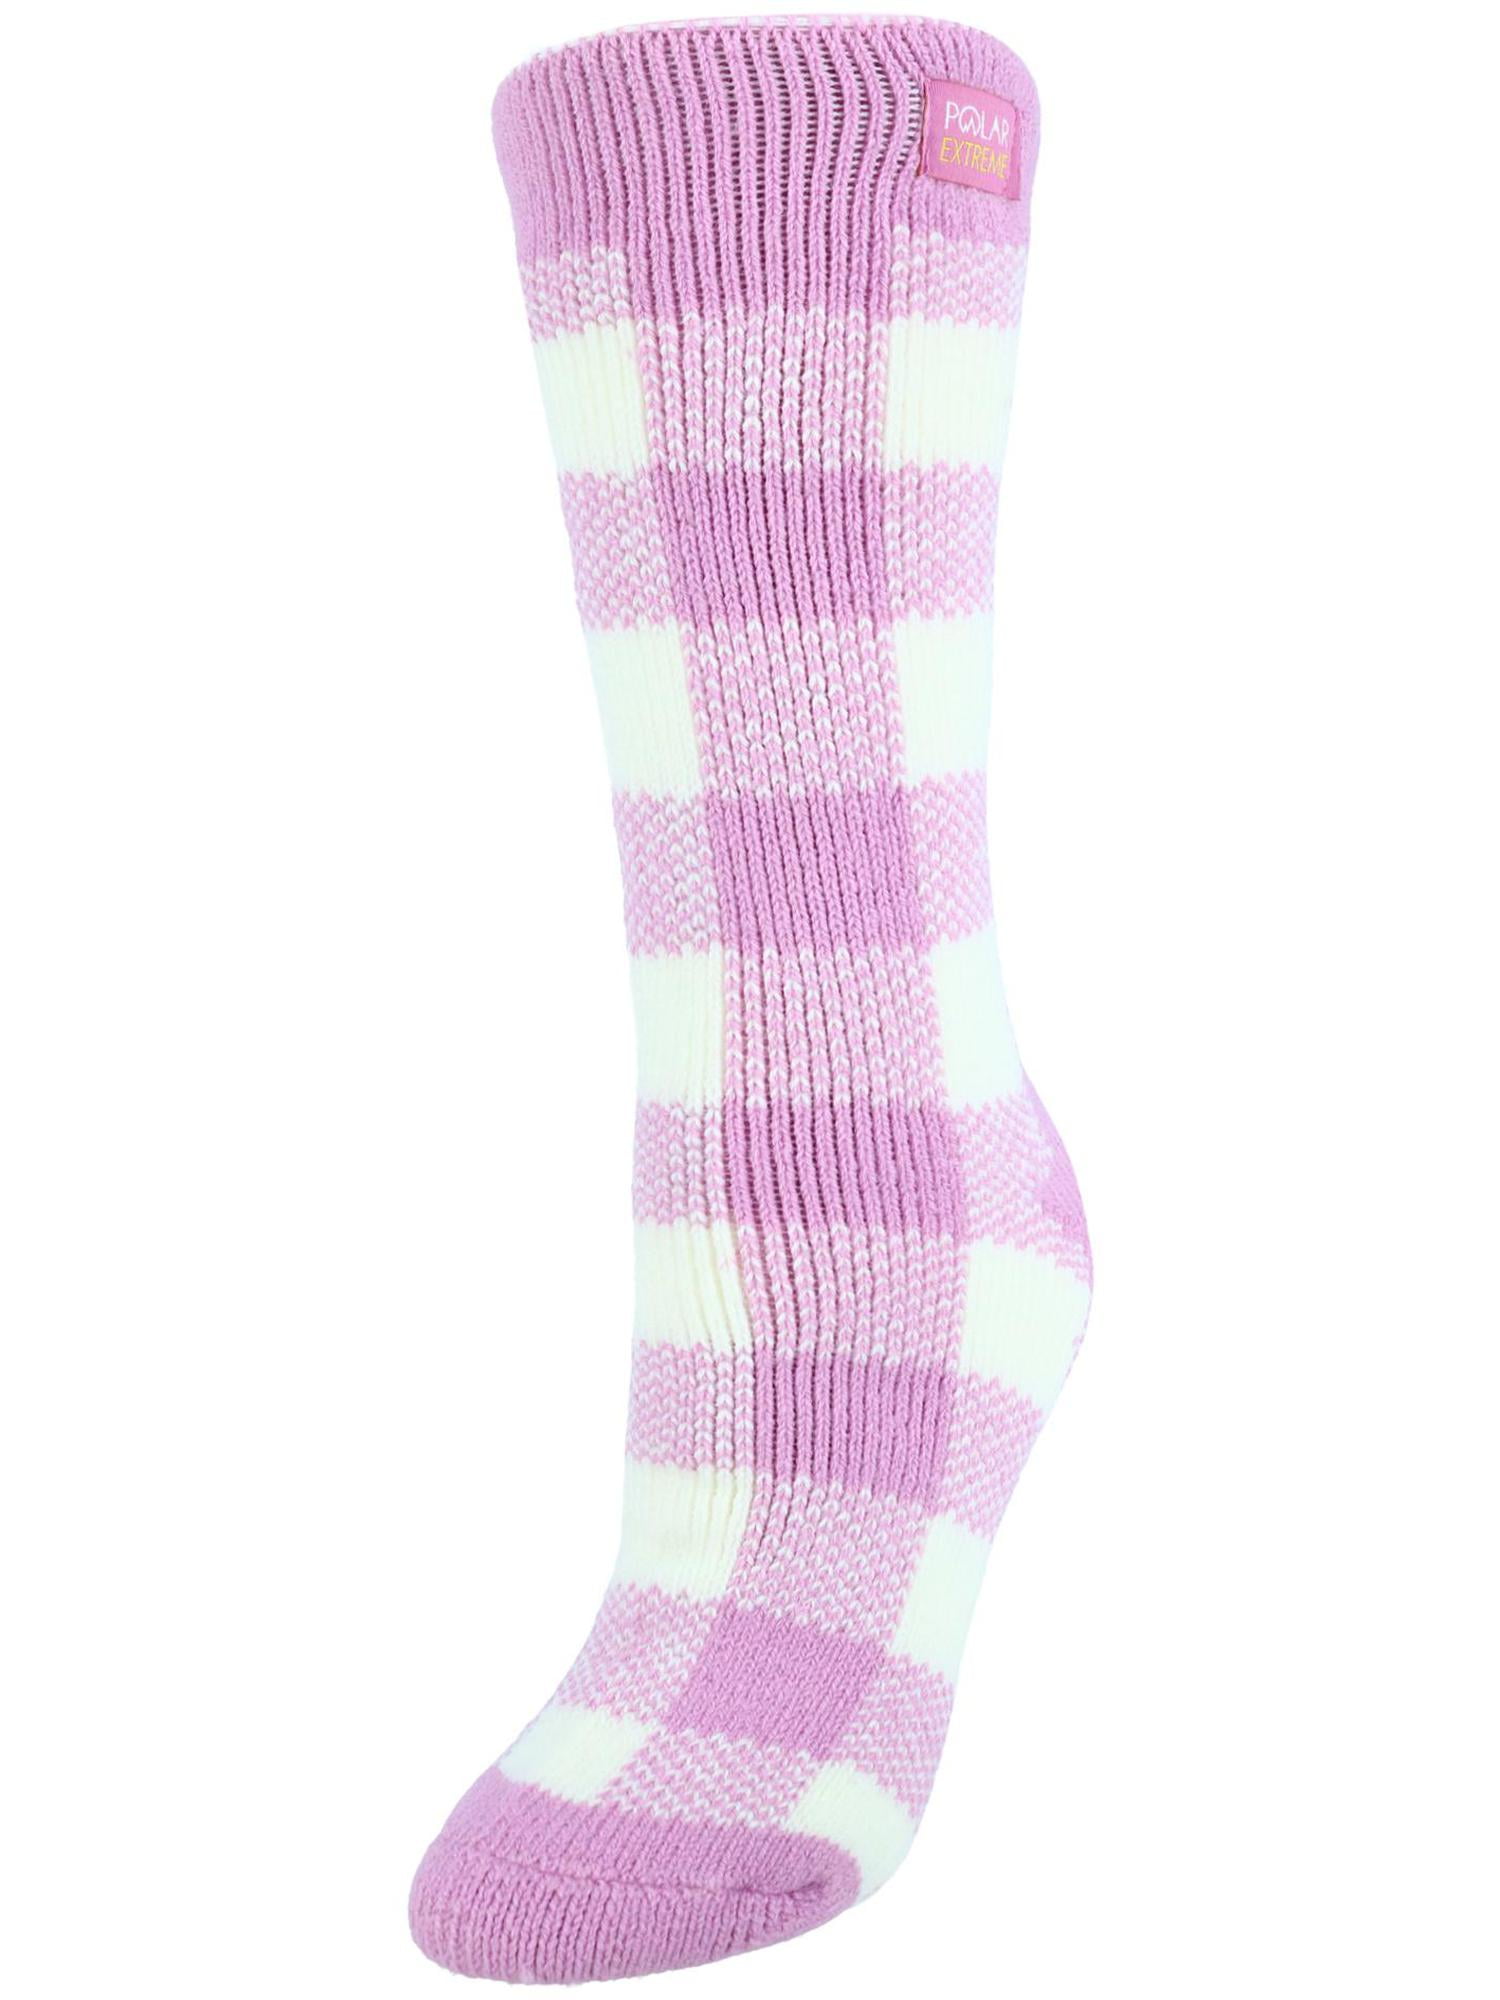 Quarter White/Pink 9 Pairs Shoe Size 9-3.5 Bobbie Brooks Girls Socks Low Cut 